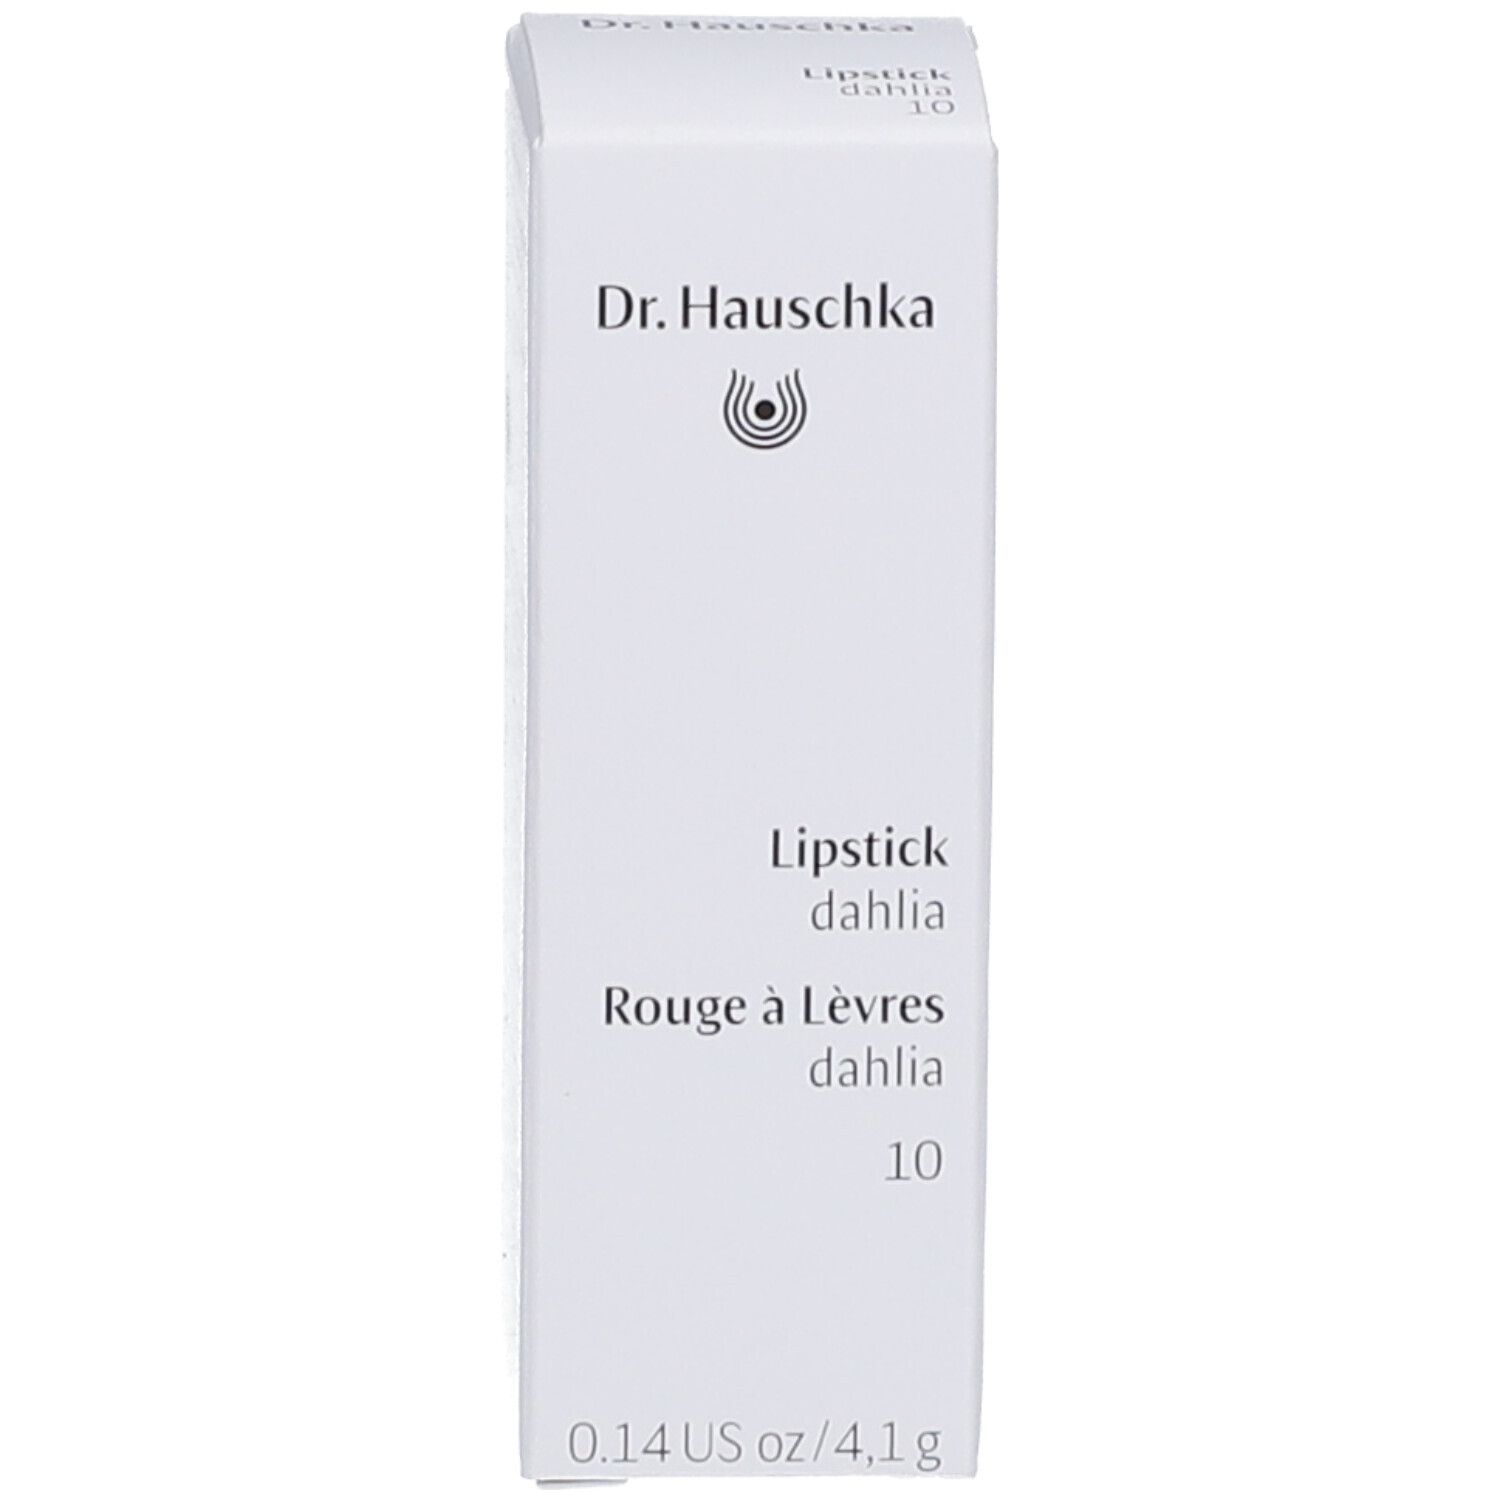 Dr. Hauschka Lipstick 10 dahlia 4,1g